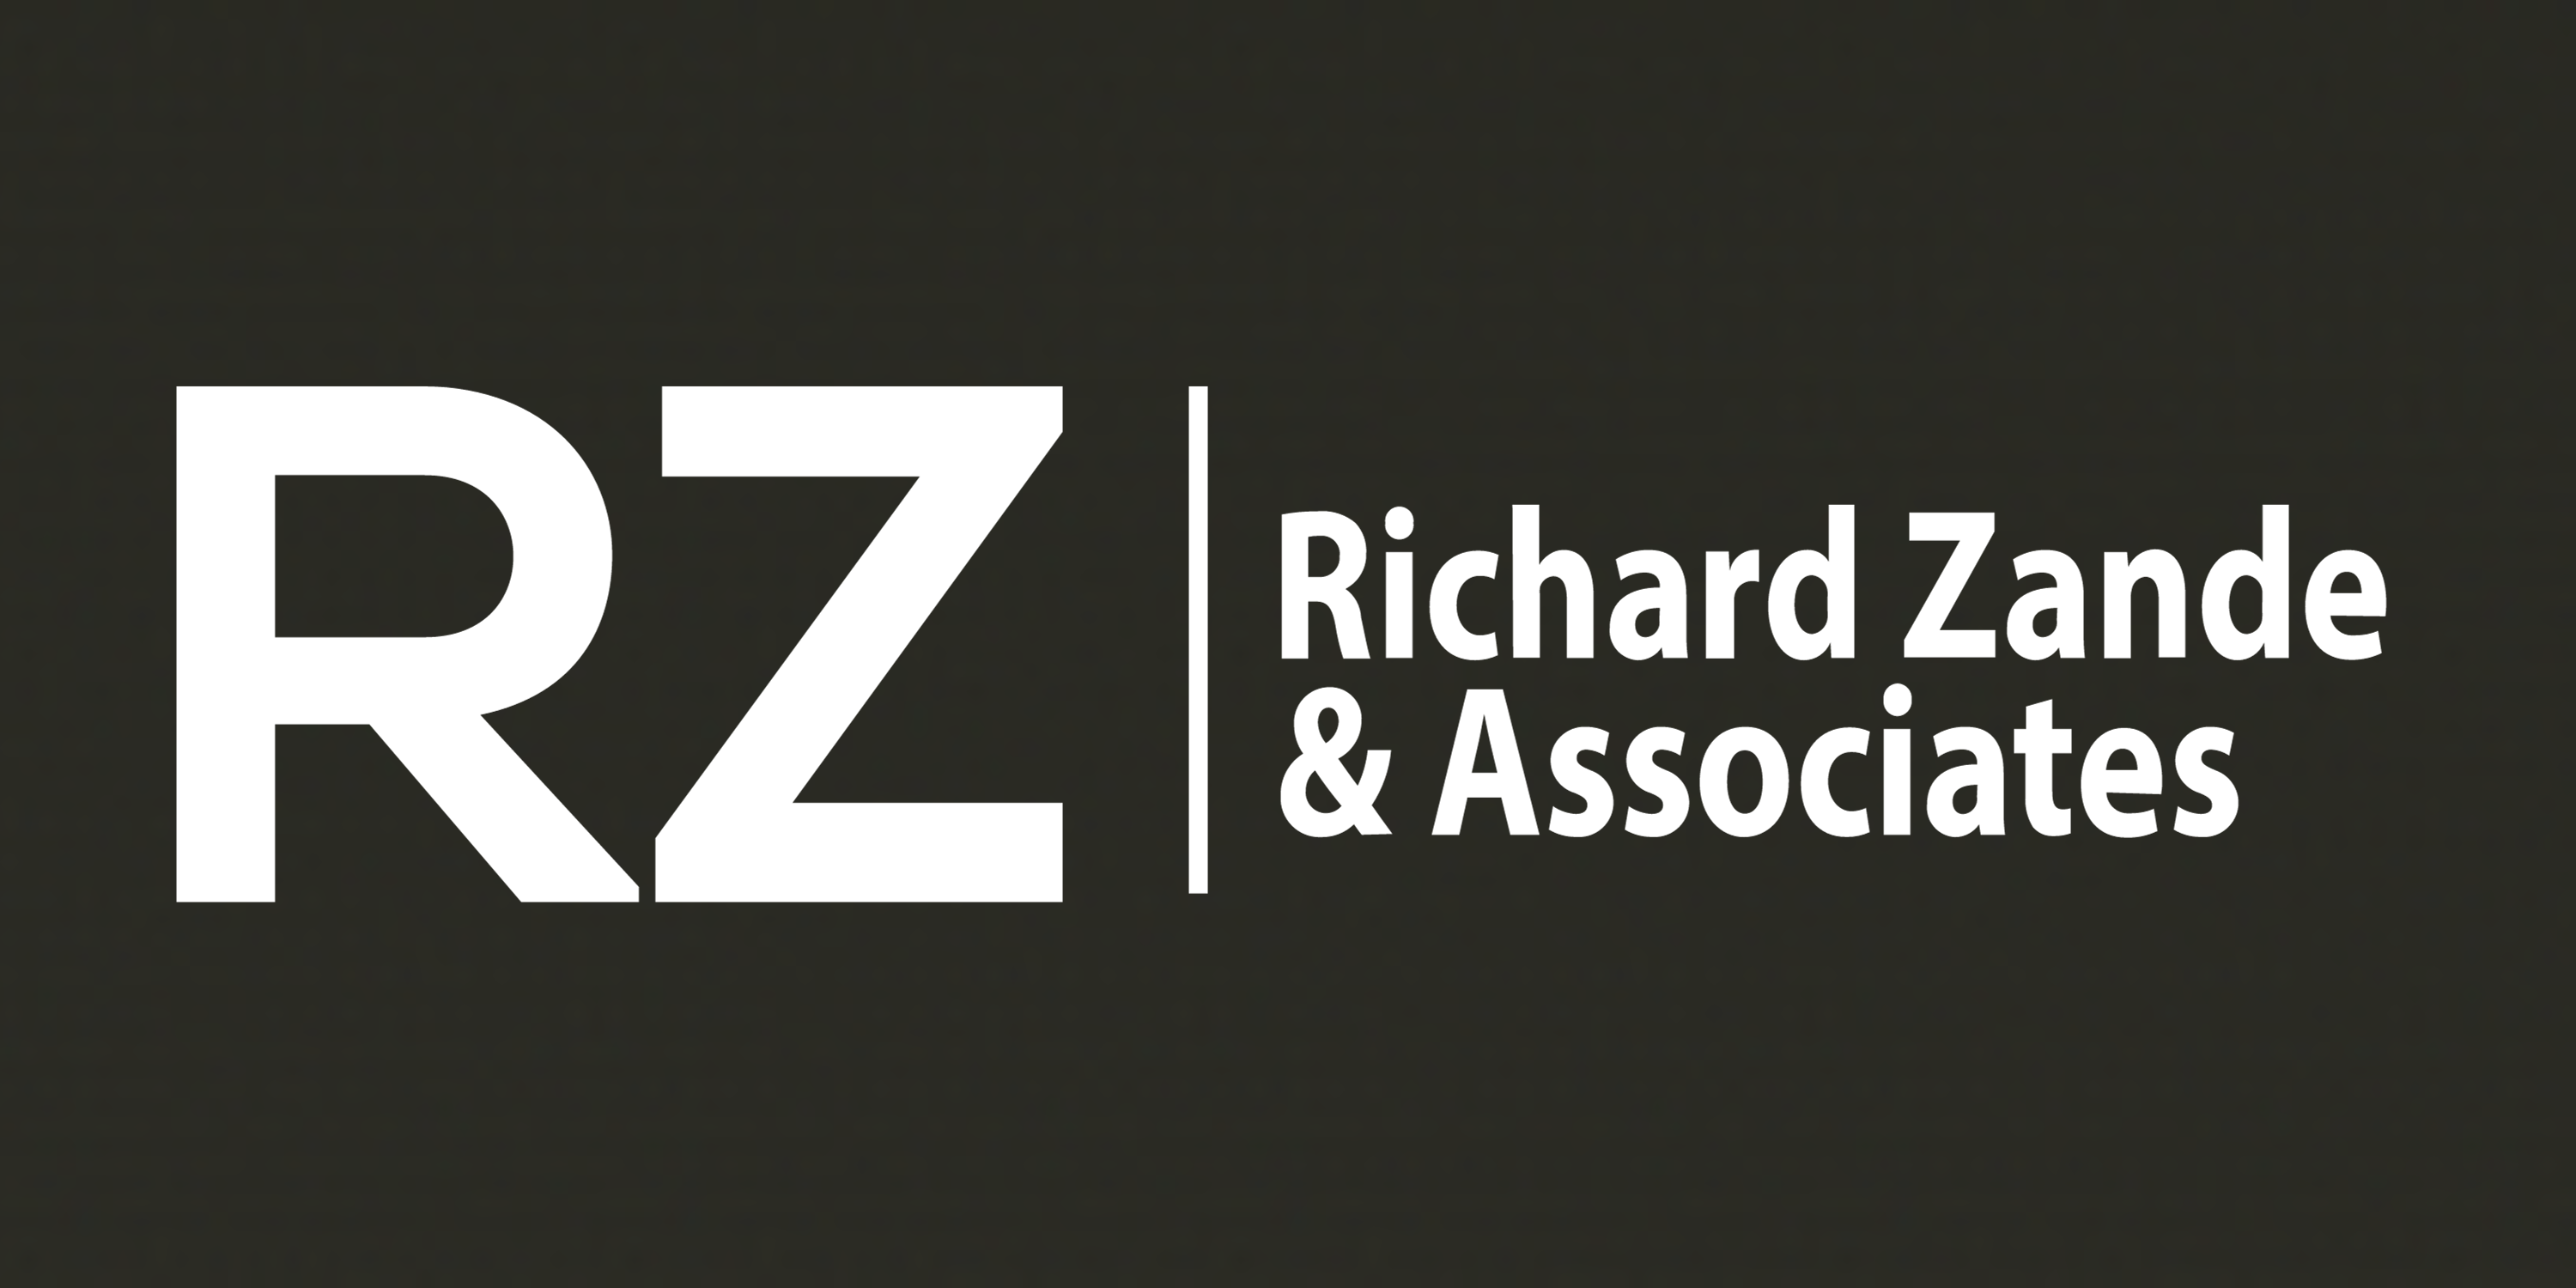 Richard Zande & Associates